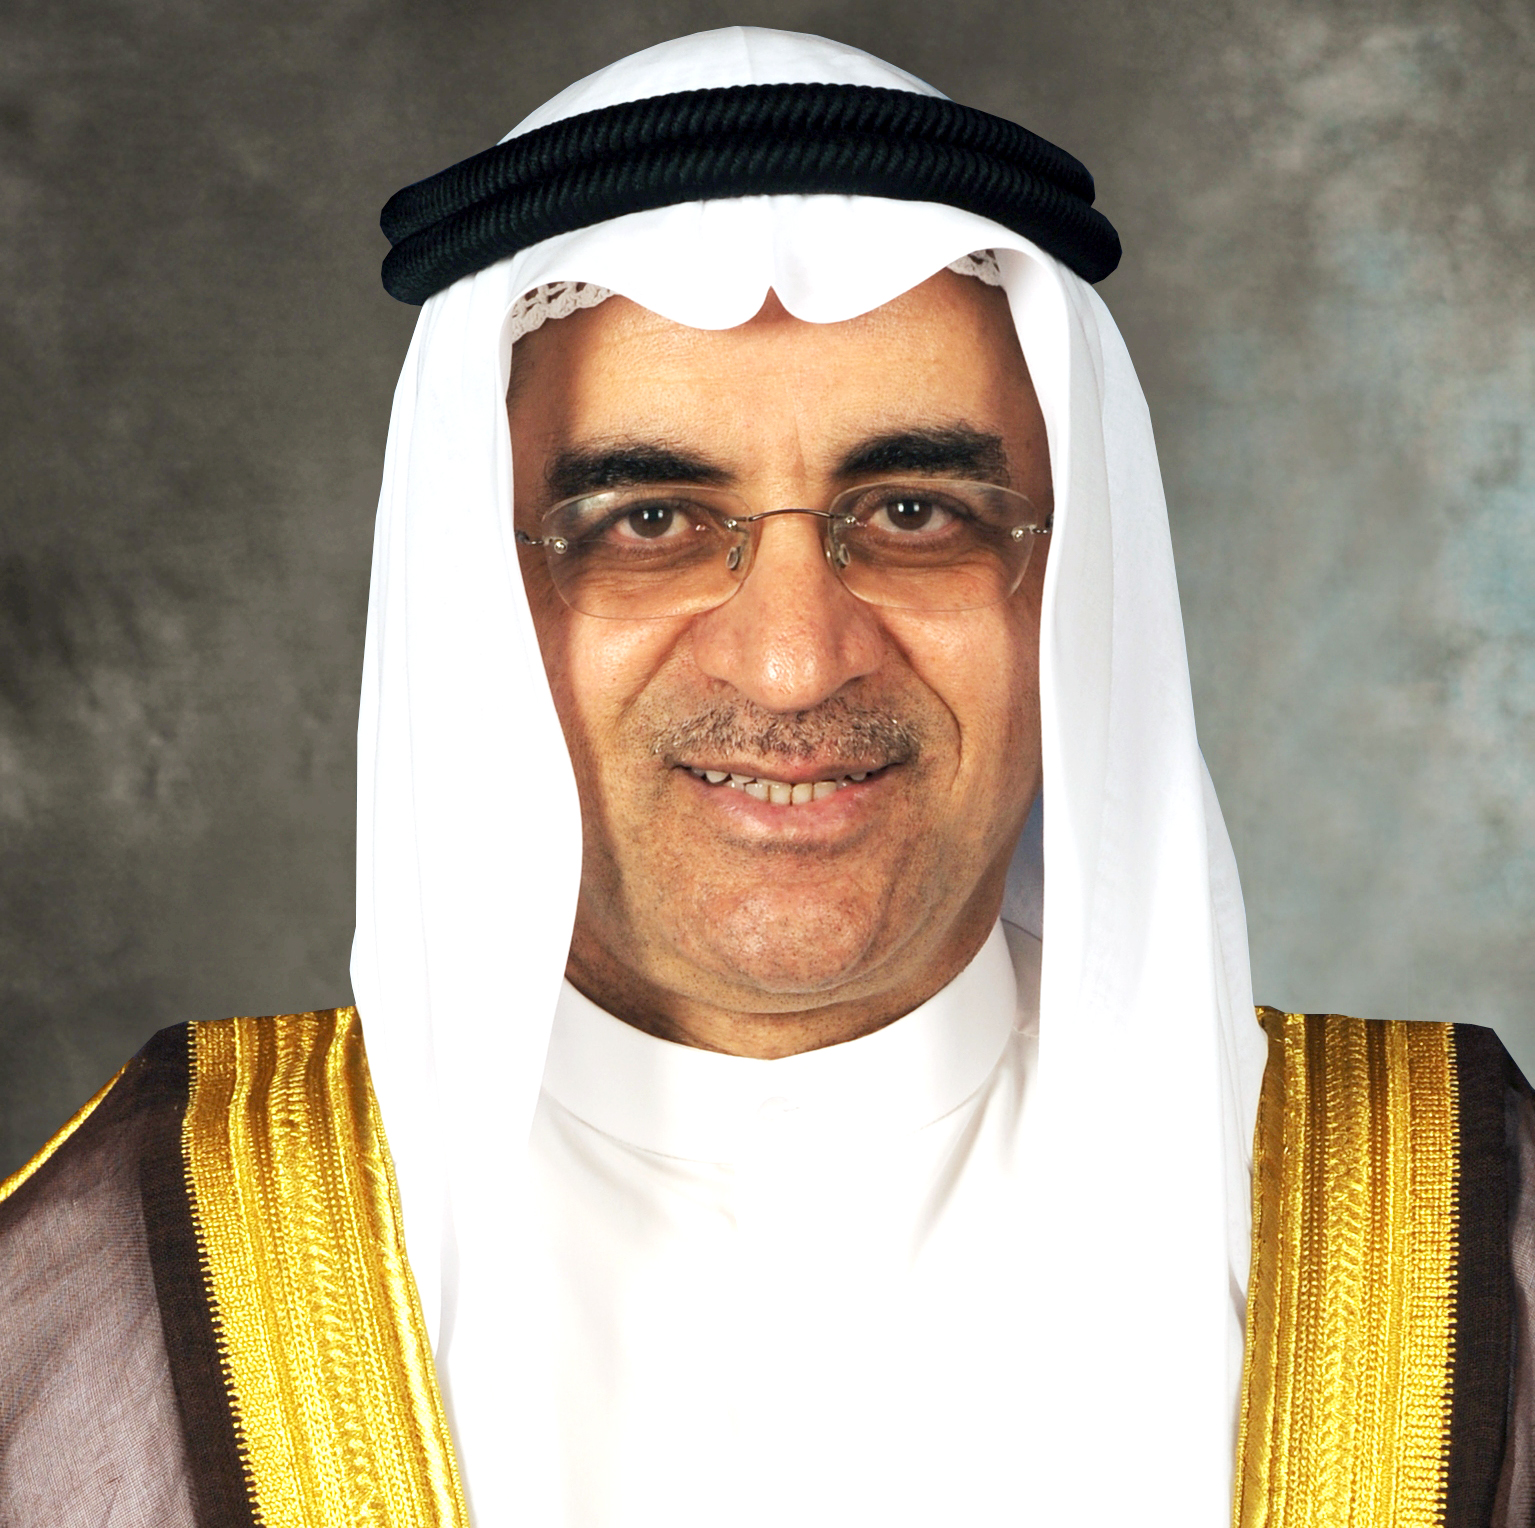 The Minister of Education Ahmad Al-Mulaifi